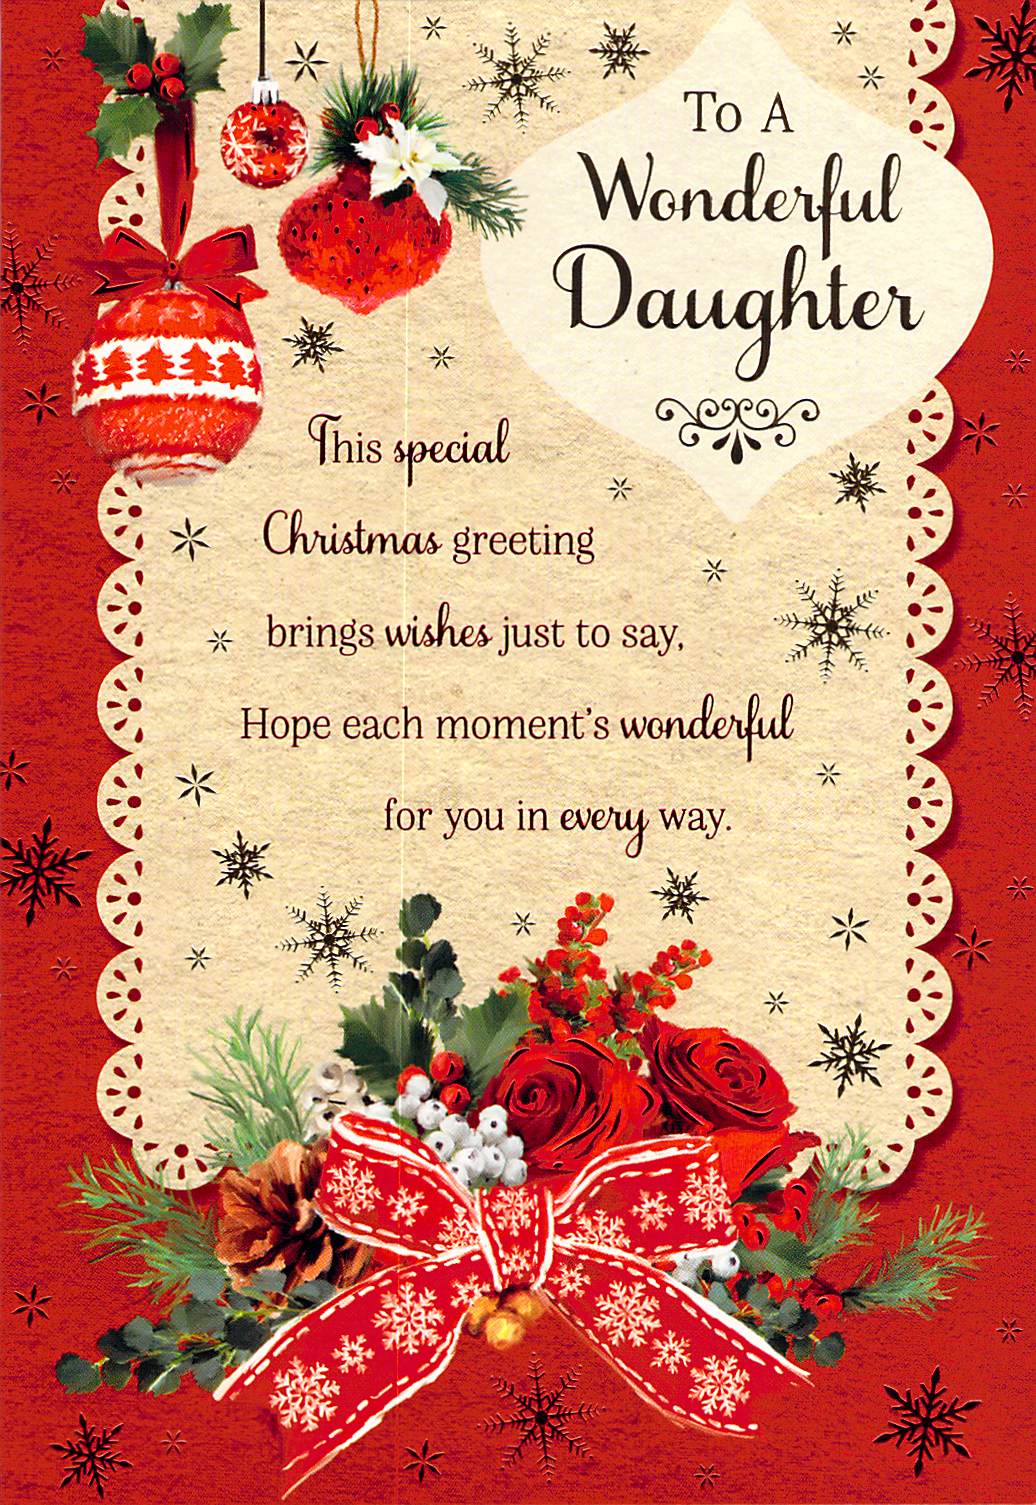 Christmas Daughter - Greeting Card - Multi Buy Discount - Free P&P